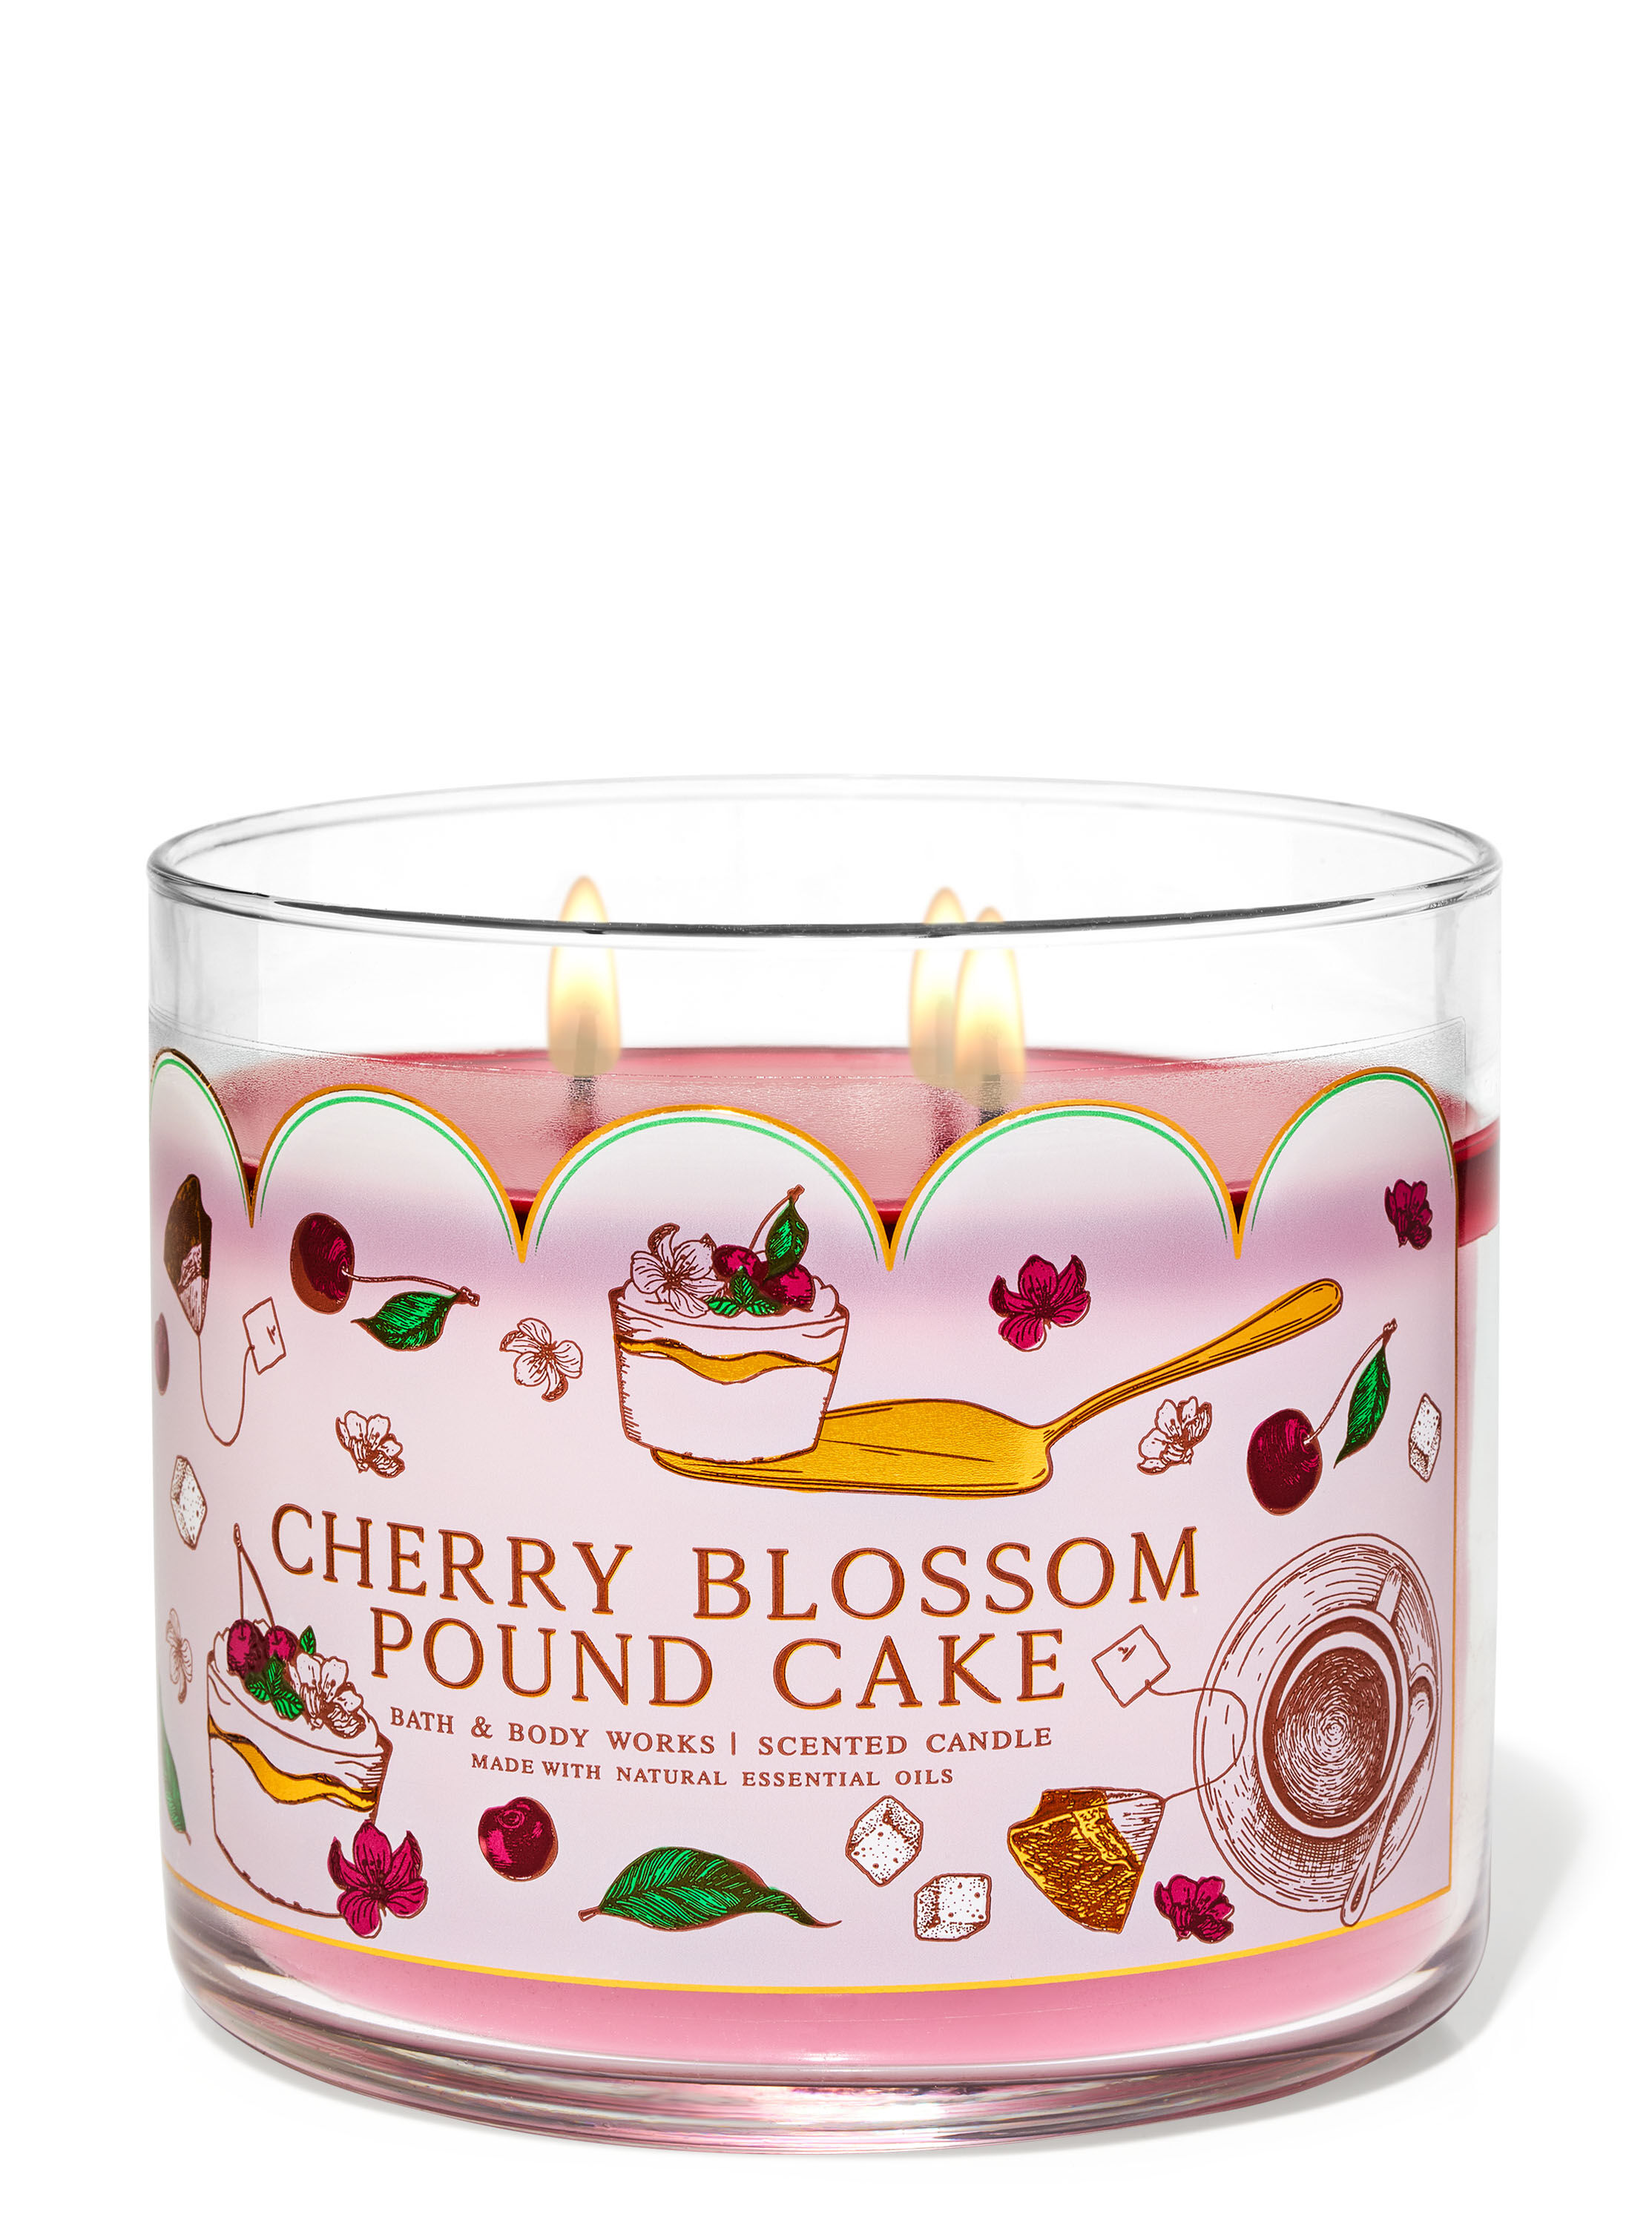 Cherry Blossom Pound Cake 3-Wick Candle